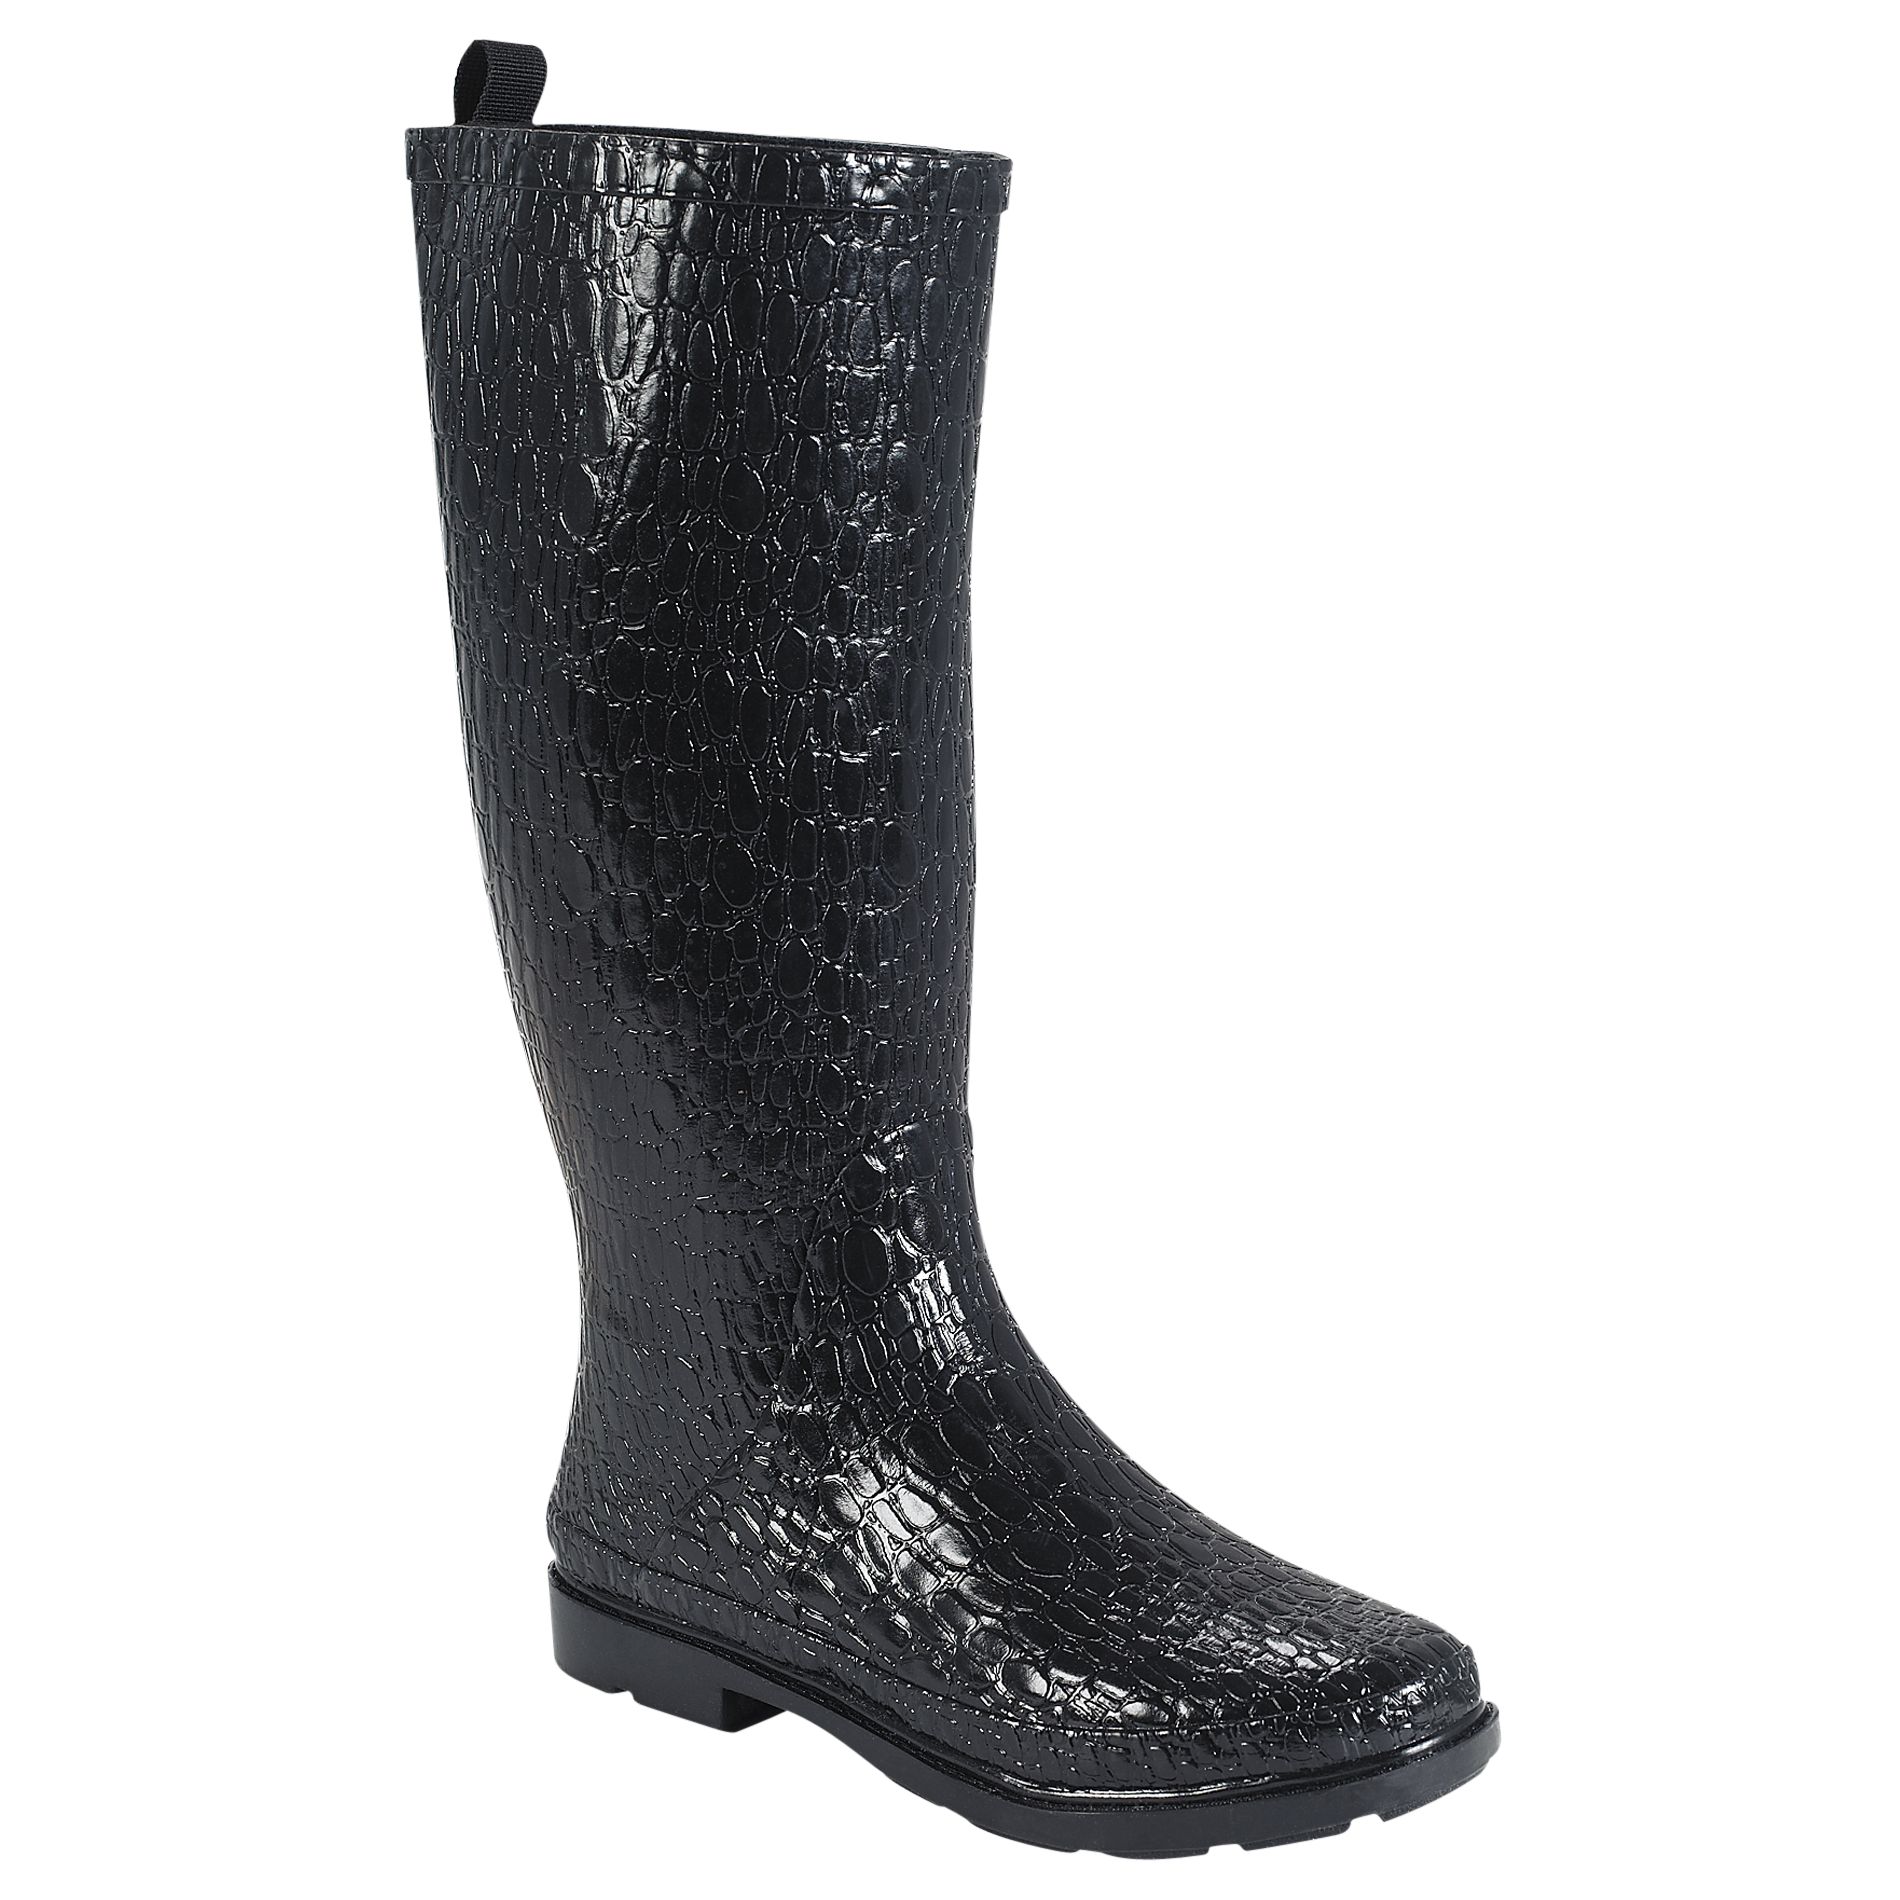 The Original Muck Boot Company Women's Rain Boot Croc - Black